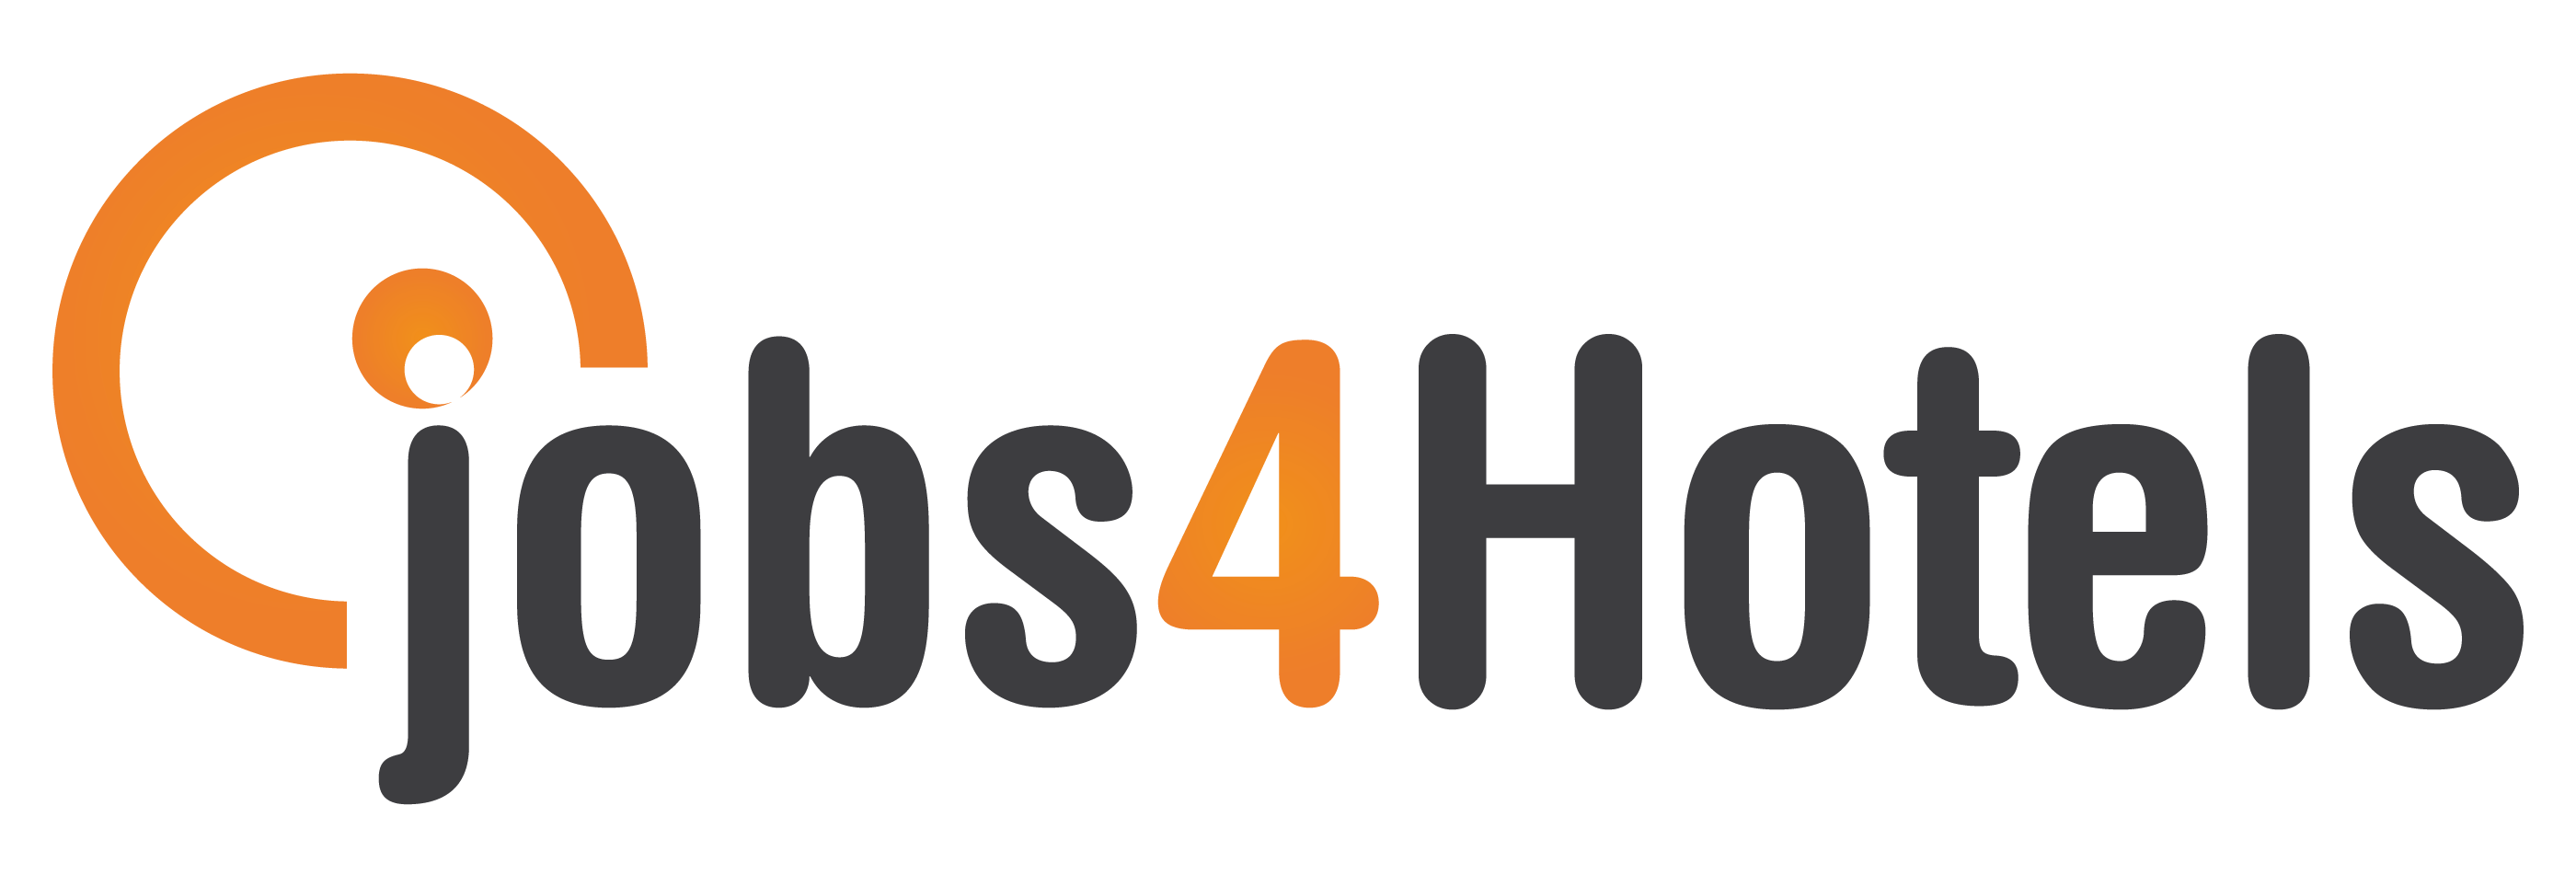 jobs4hotels_logo